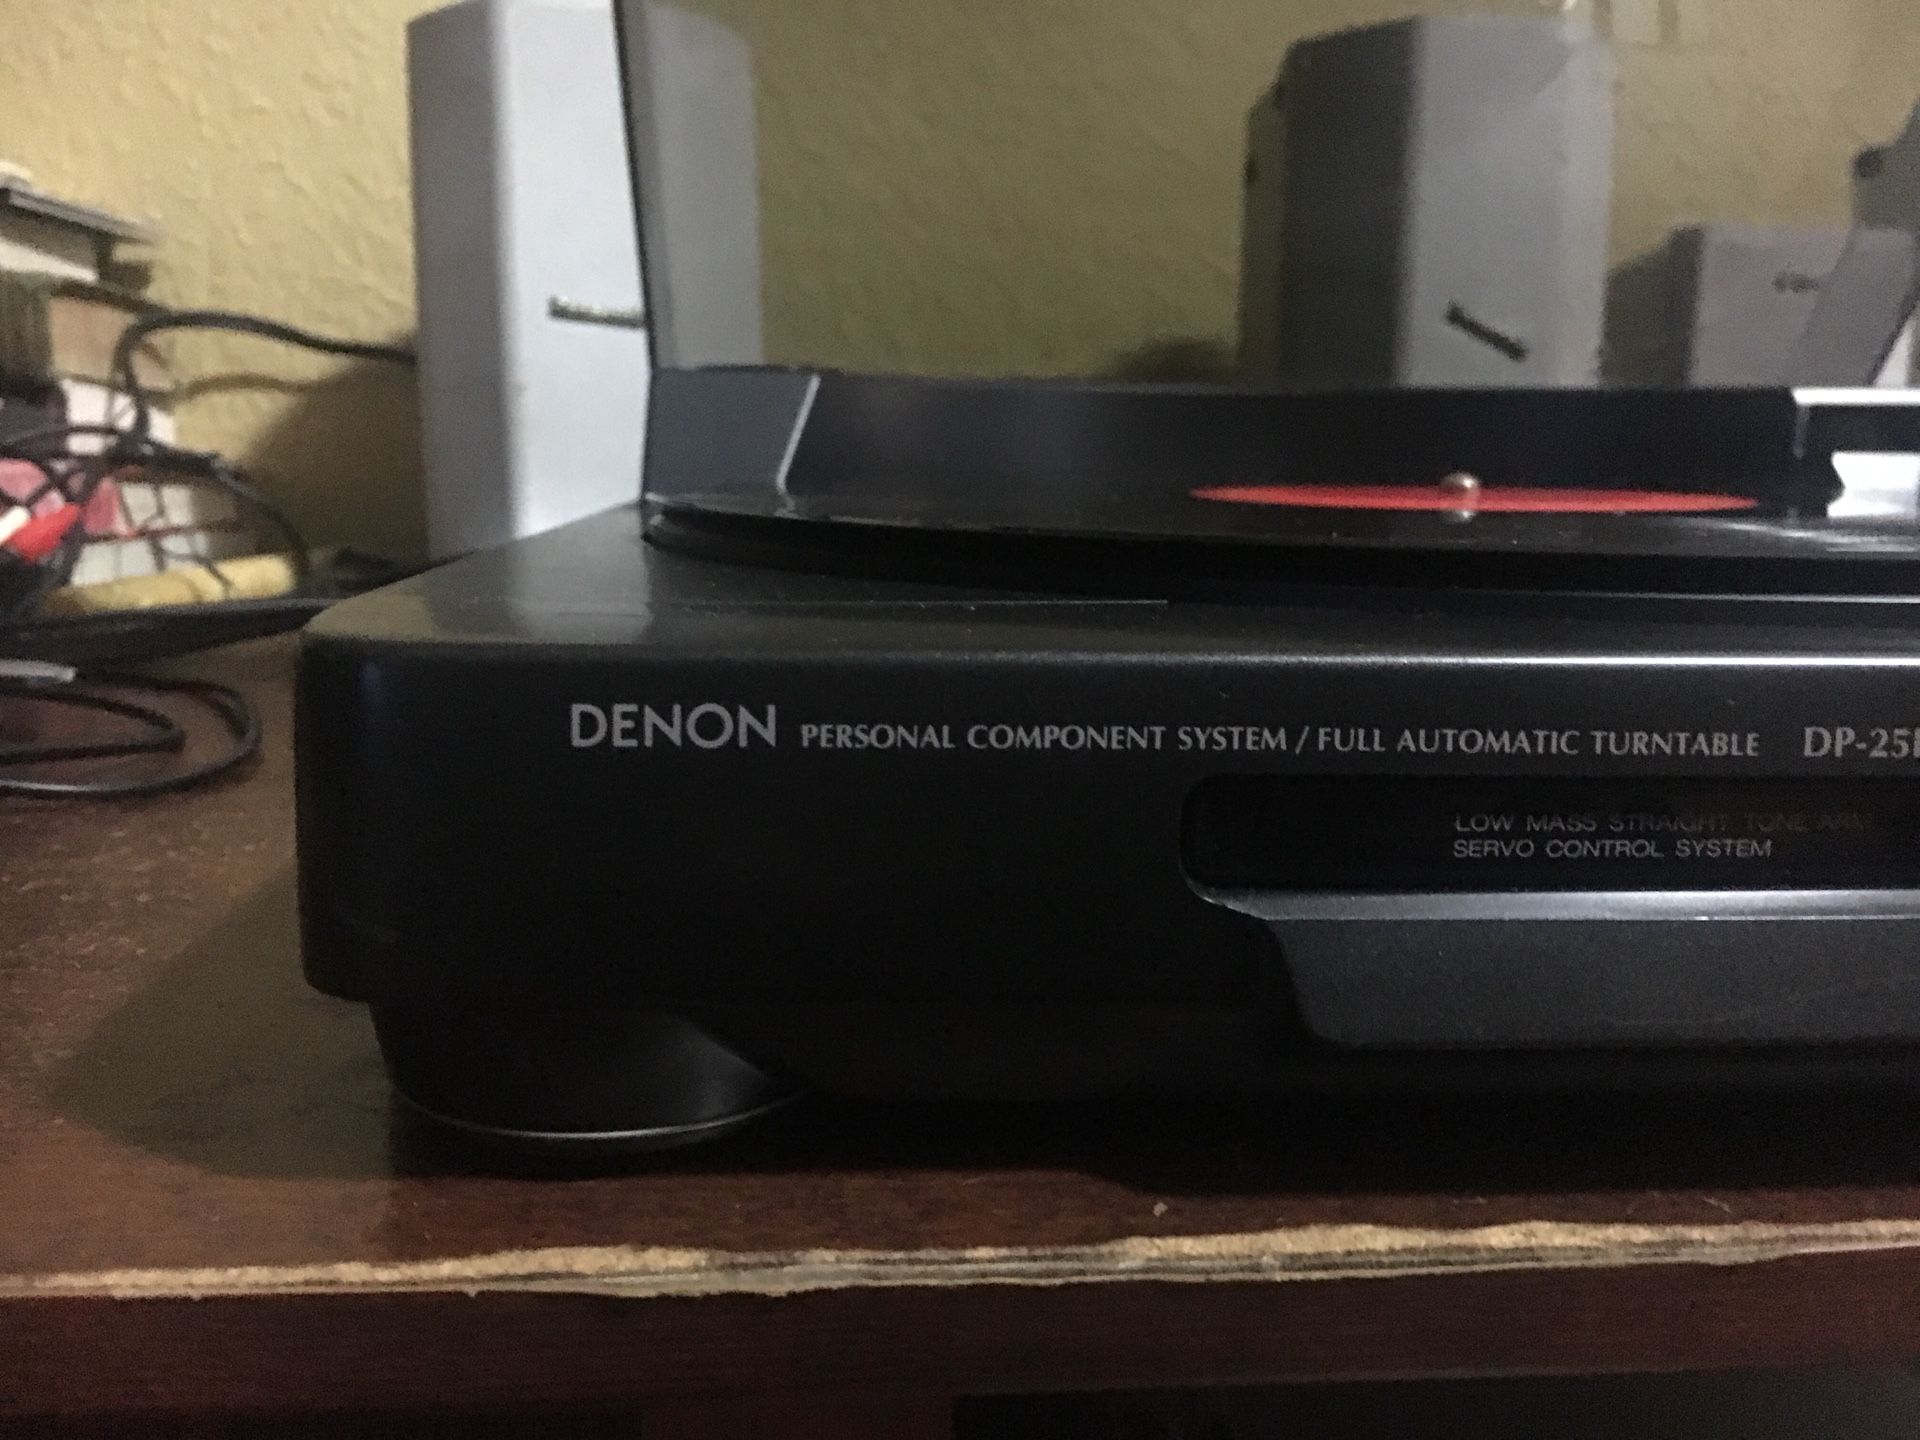 Denon DP-25 turntable record player